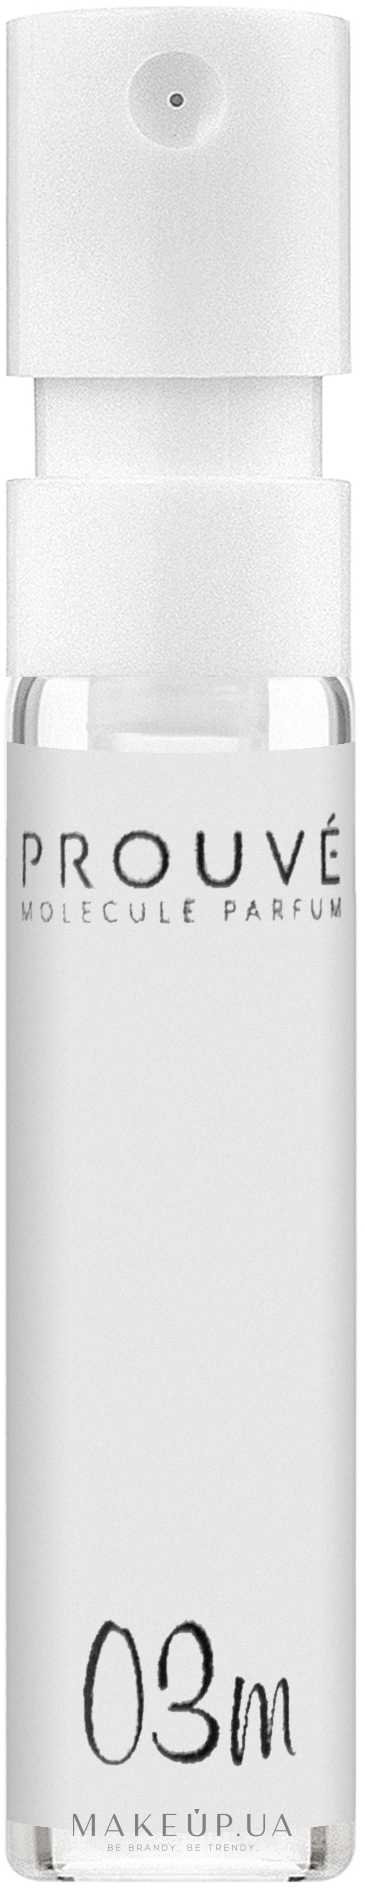 Prouve Molecule Parfum №03m - Парфуми (пробник) — фото 2ml